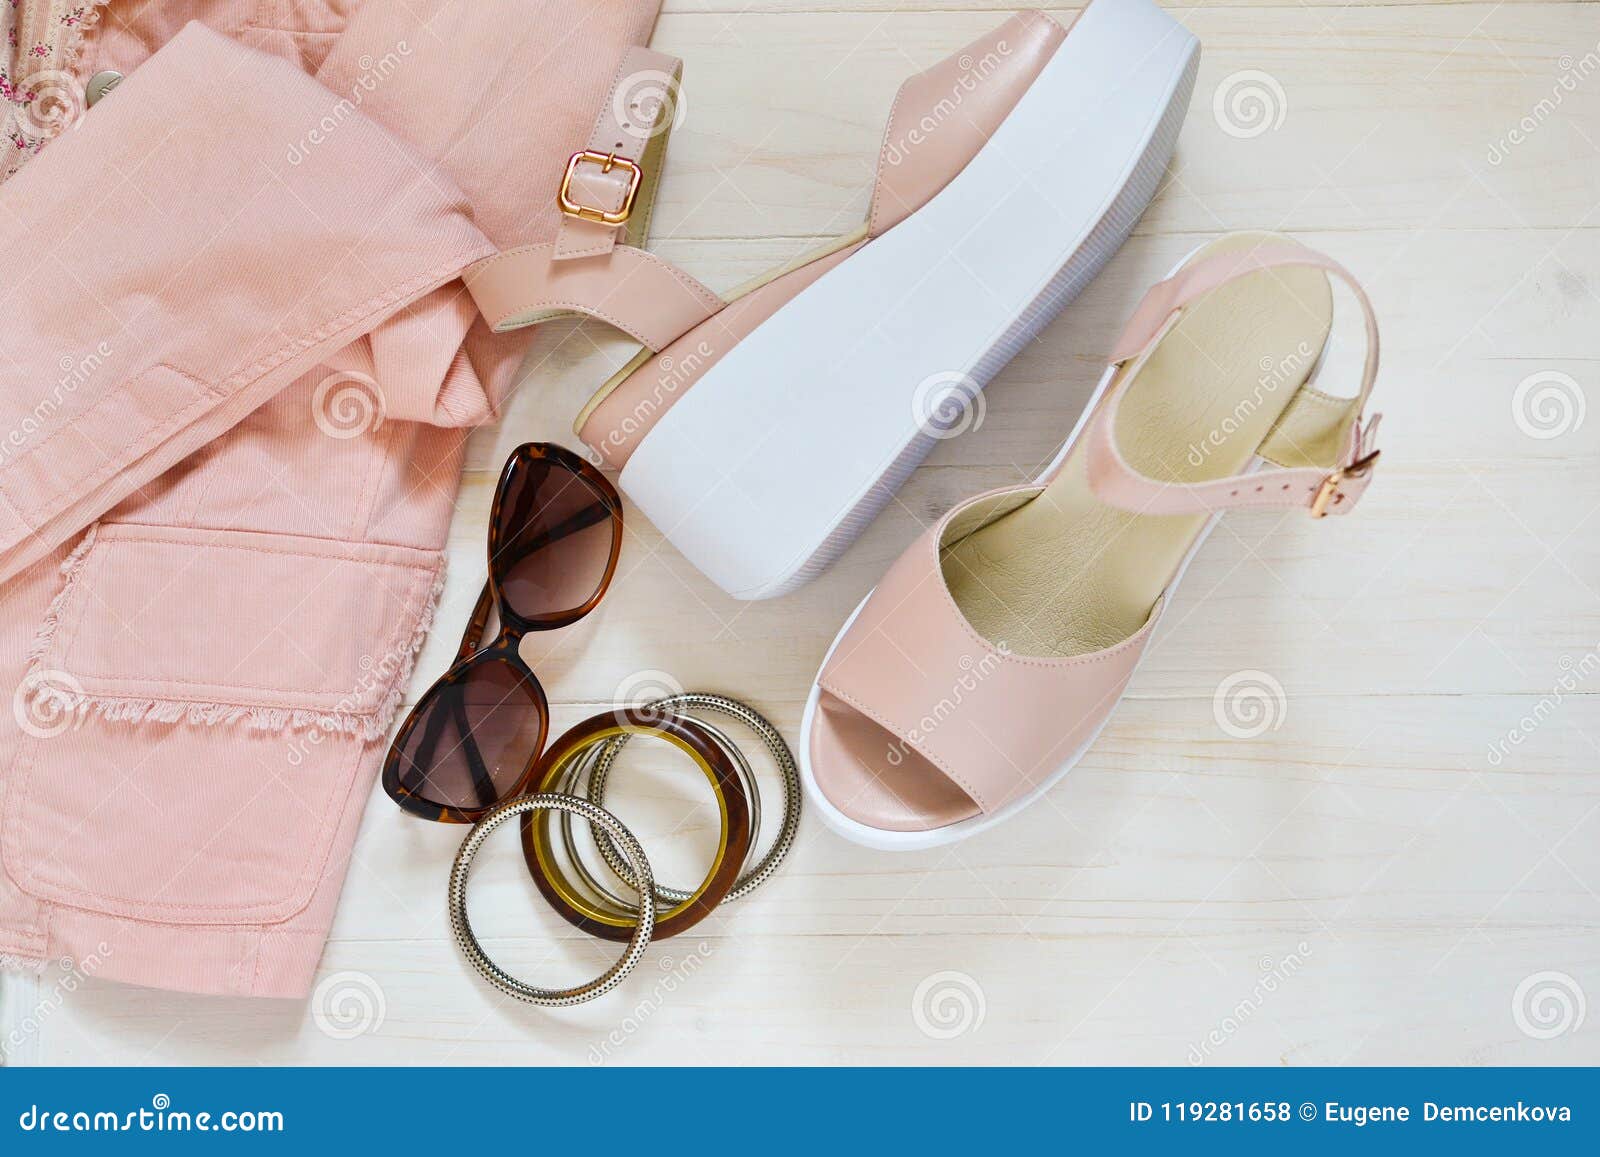 peach accessories sandals